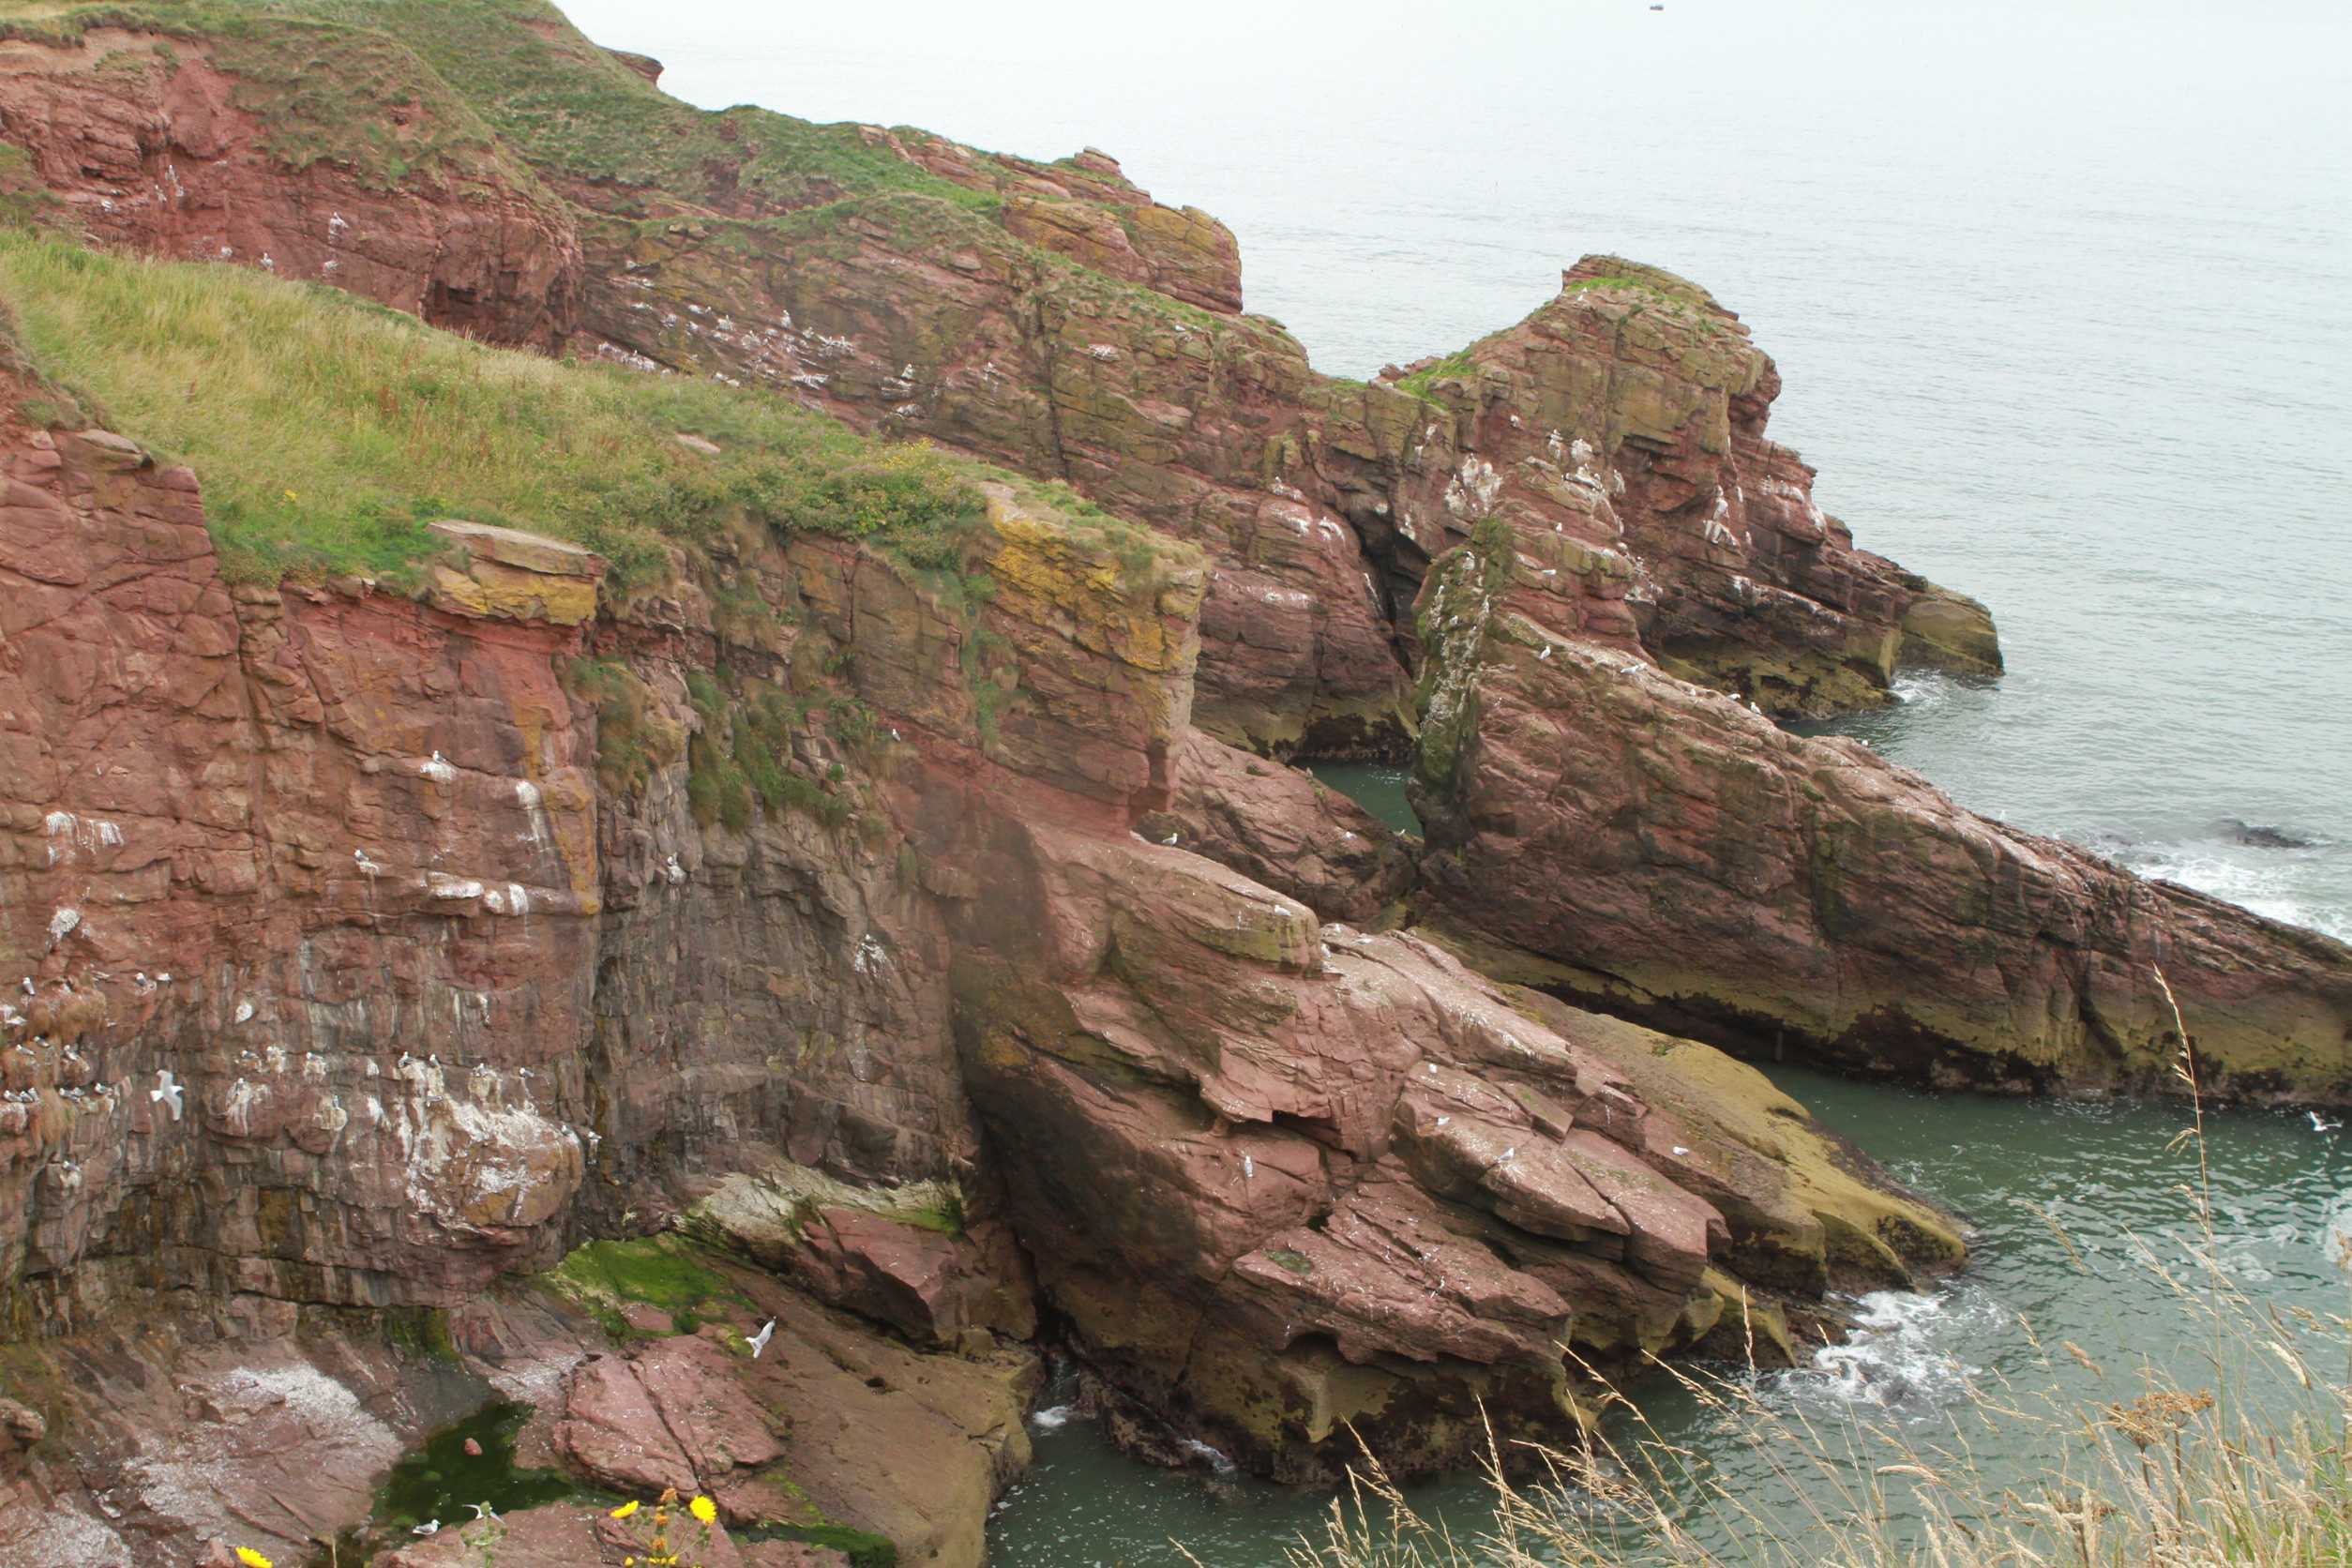 Arbroath cliffs